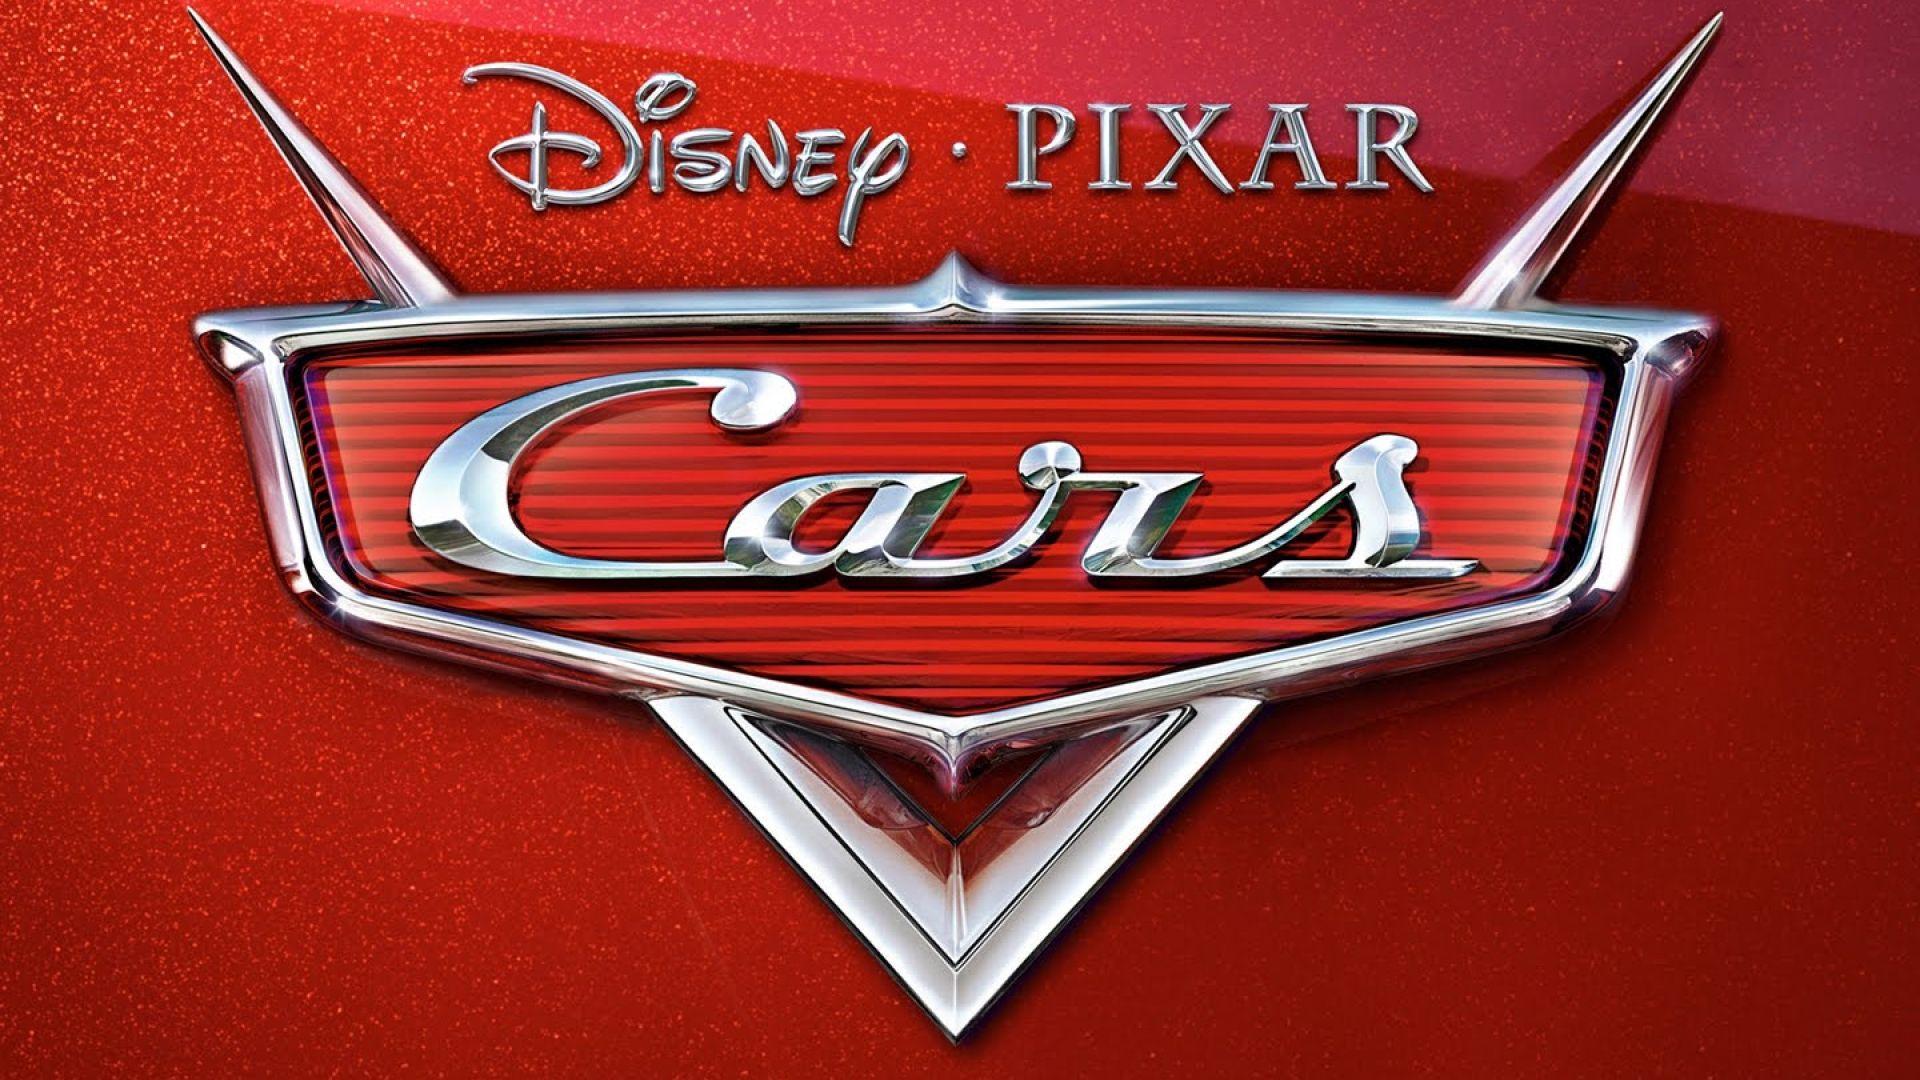 Disney Cars Movie Logo - Disney Pixar Cars Wallpaper - HD Wallpapers